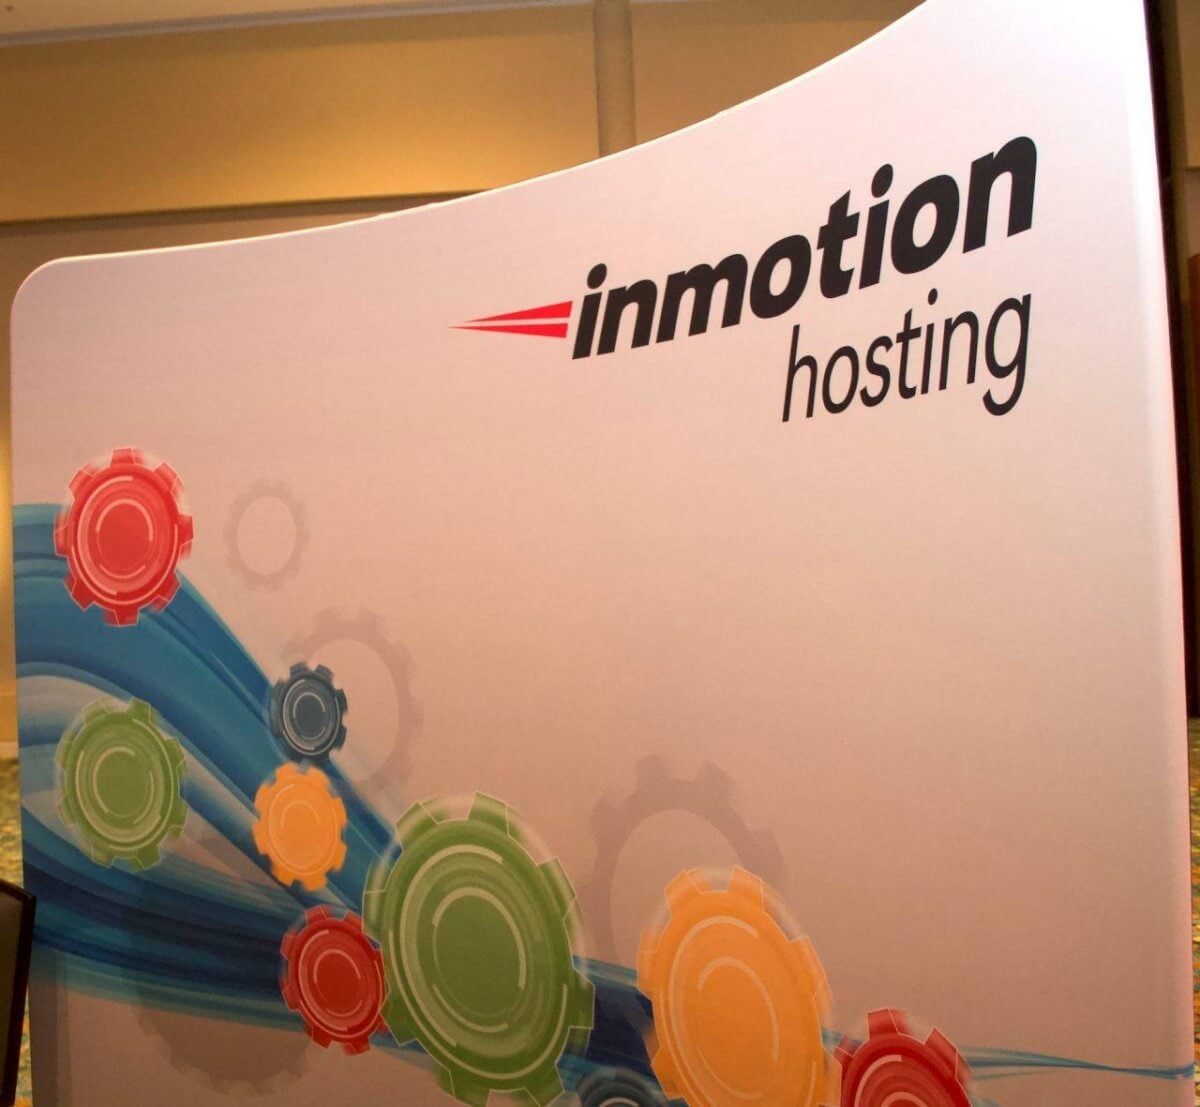 Inmotion Hosting

partners.inmotionhosting.com/n15zeR

#hosting #hosting #hostingtips #hostingservices #webhosting #webhostingtalk #webhostingoffer #webhostingservice #webhostingcompany #webhostingprovider #speed #builtforspeed